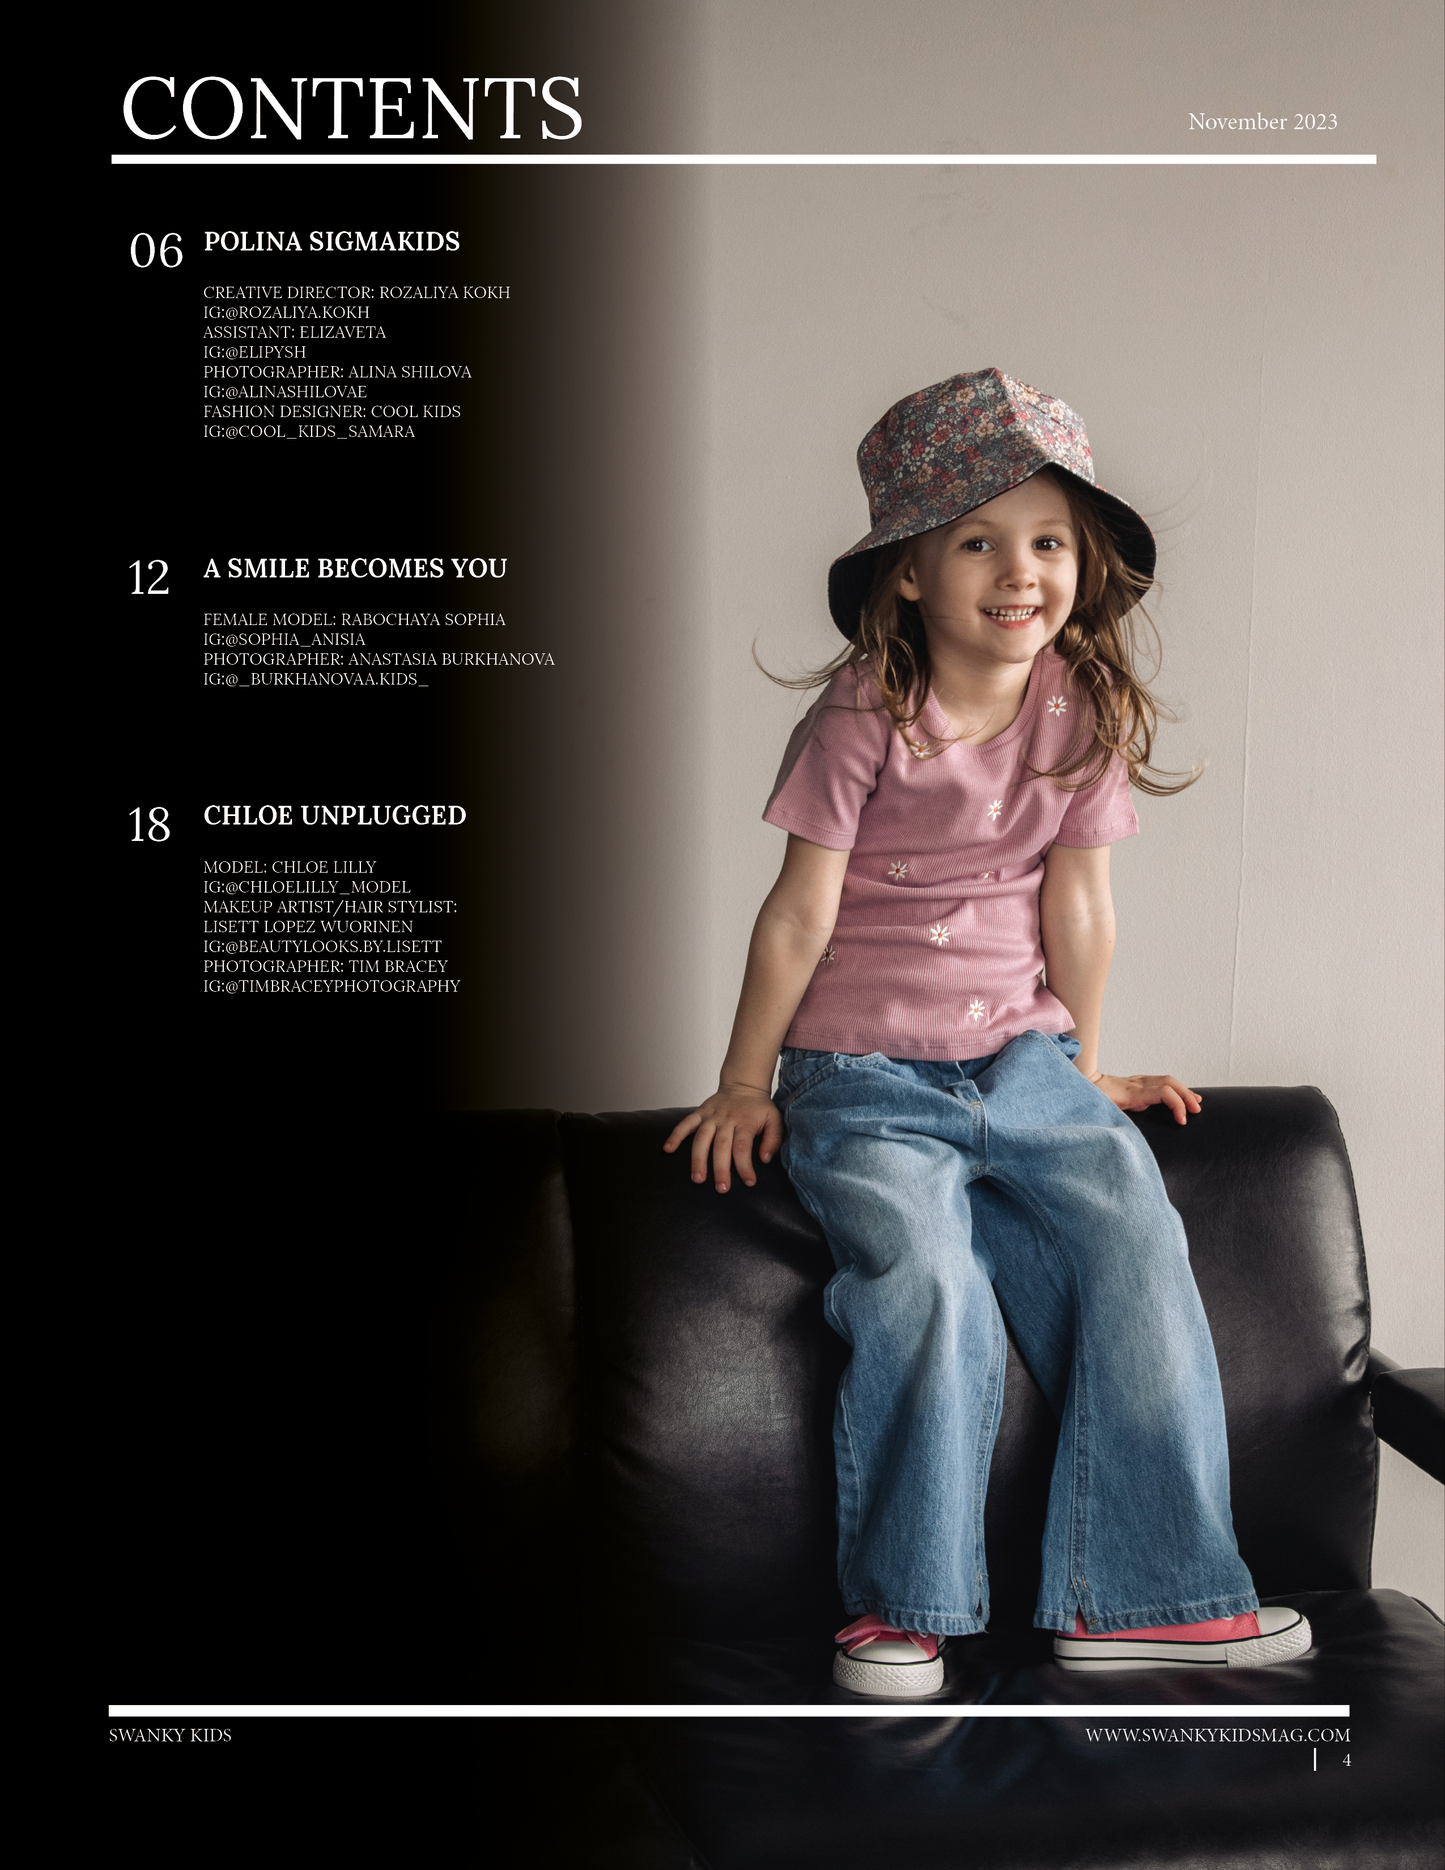 Swanky Kids Magazine - November 2023: The Swanky Kids and Teens Edition Issue IX